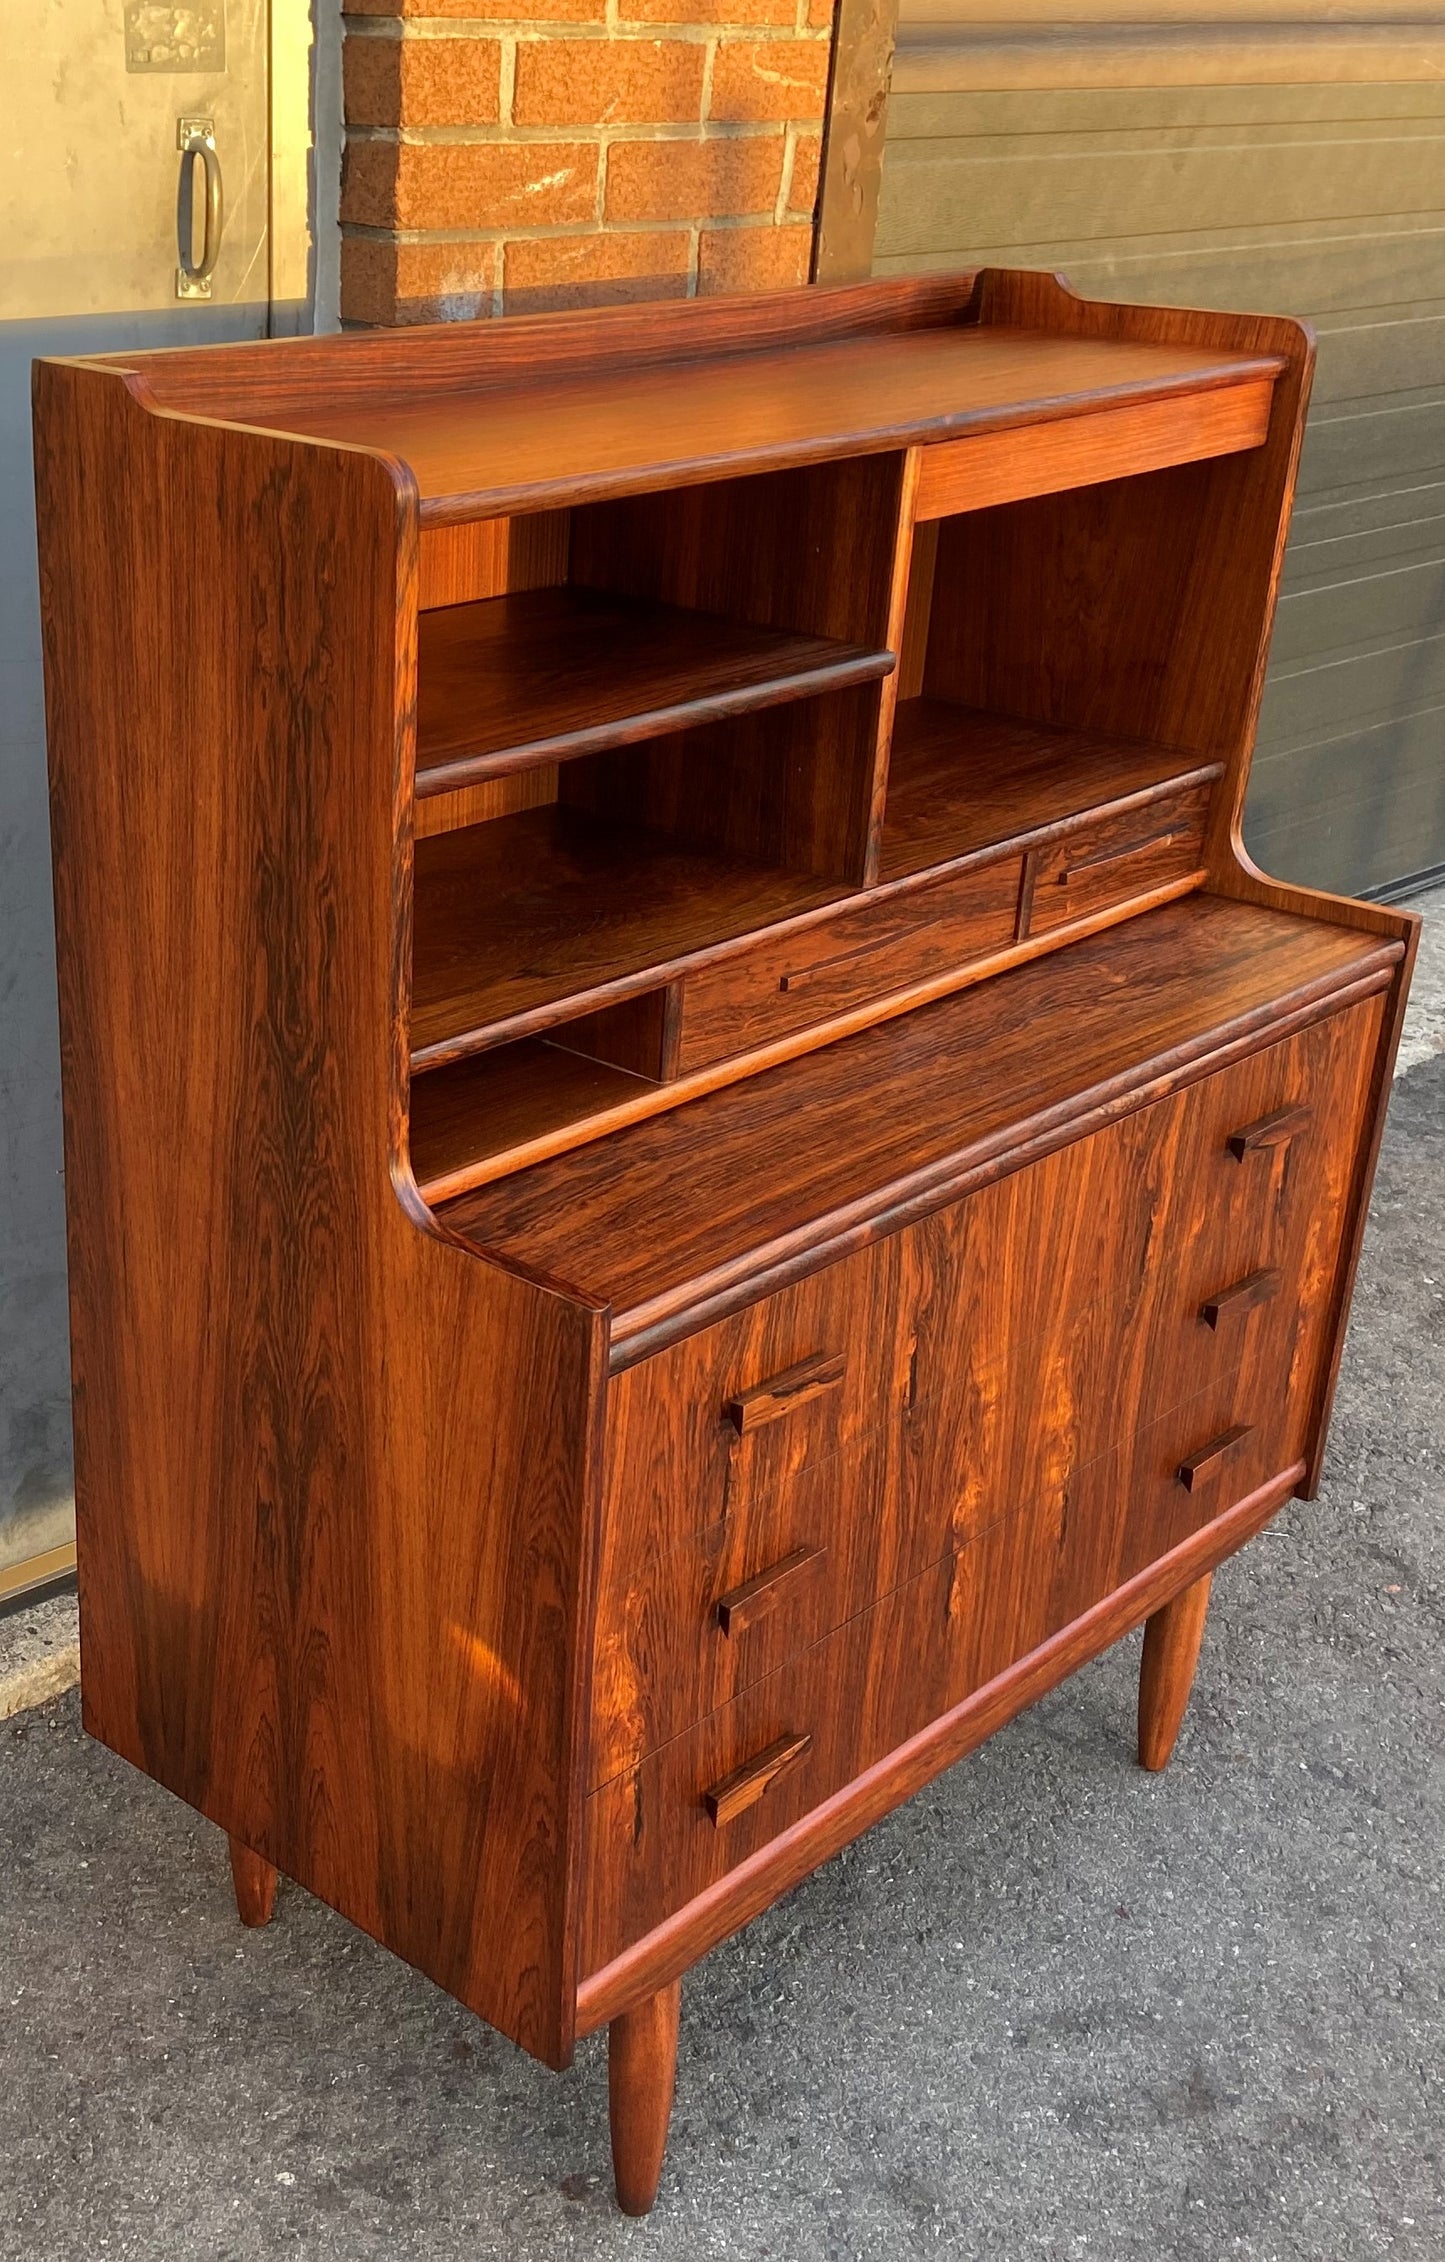 REFINISHED Danish Mid Century Modern Rosewood Vanity or Secretary Desk